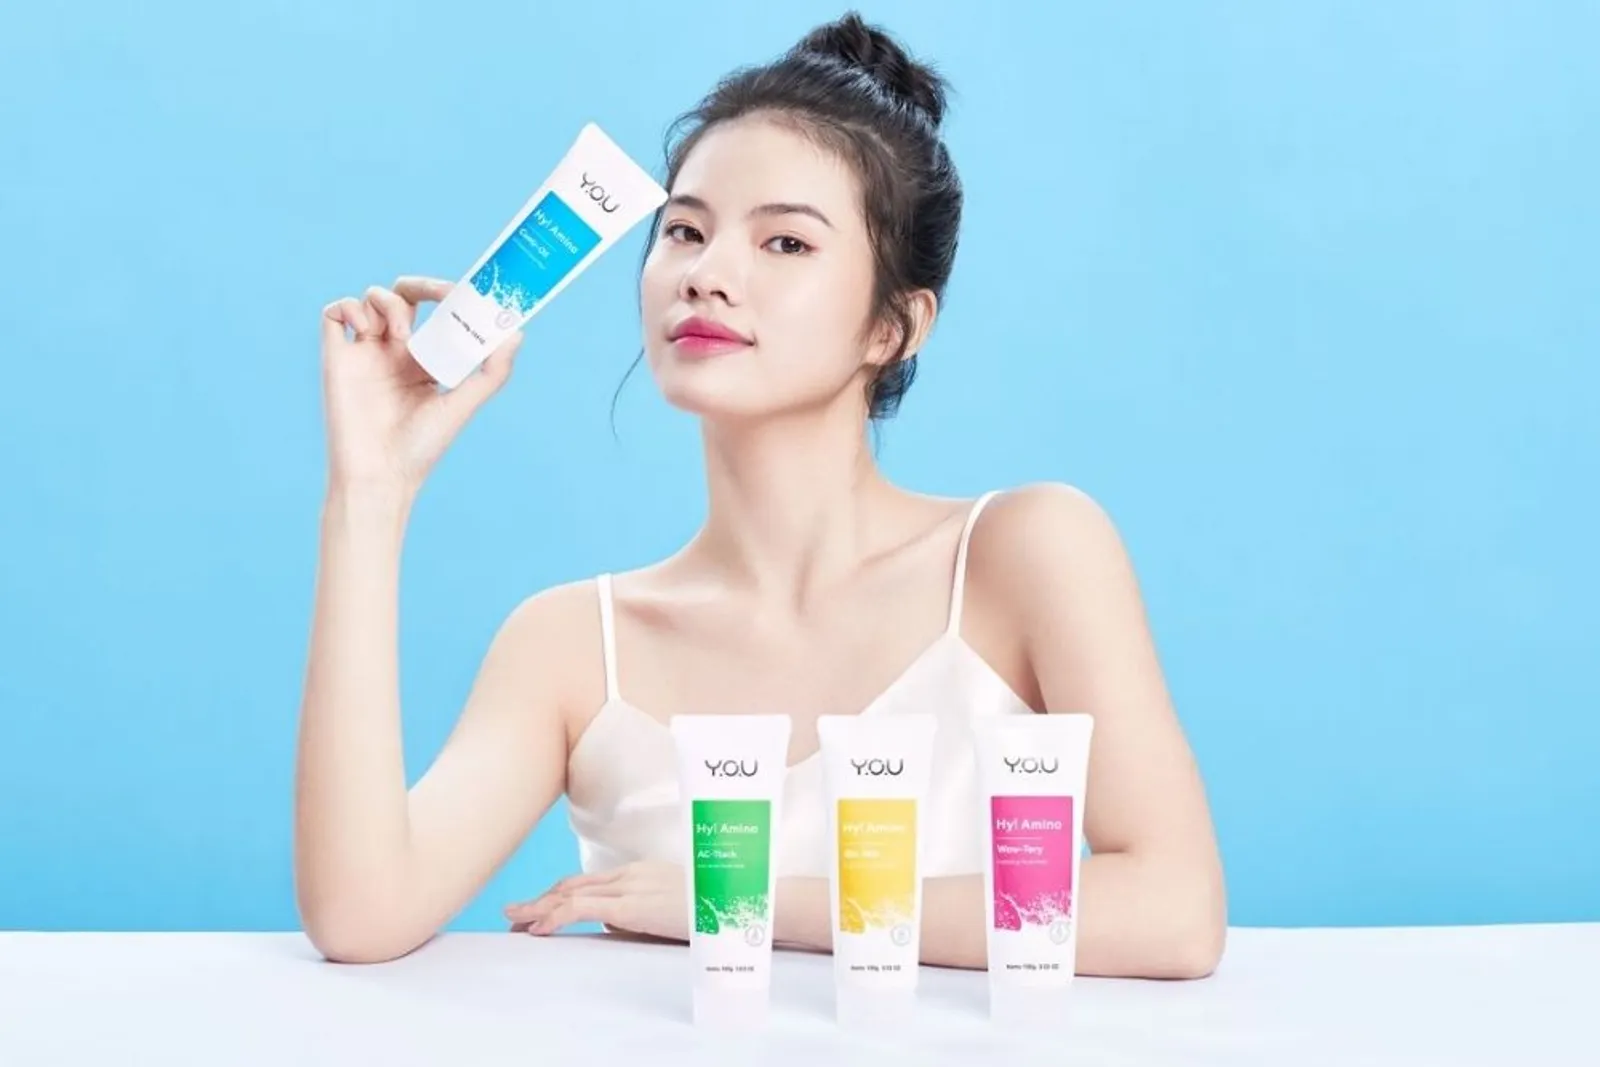 Y.O.U Hy! Amino Facial Wash, Bersihkan Wajah Tanpa Sensasi Ketarik